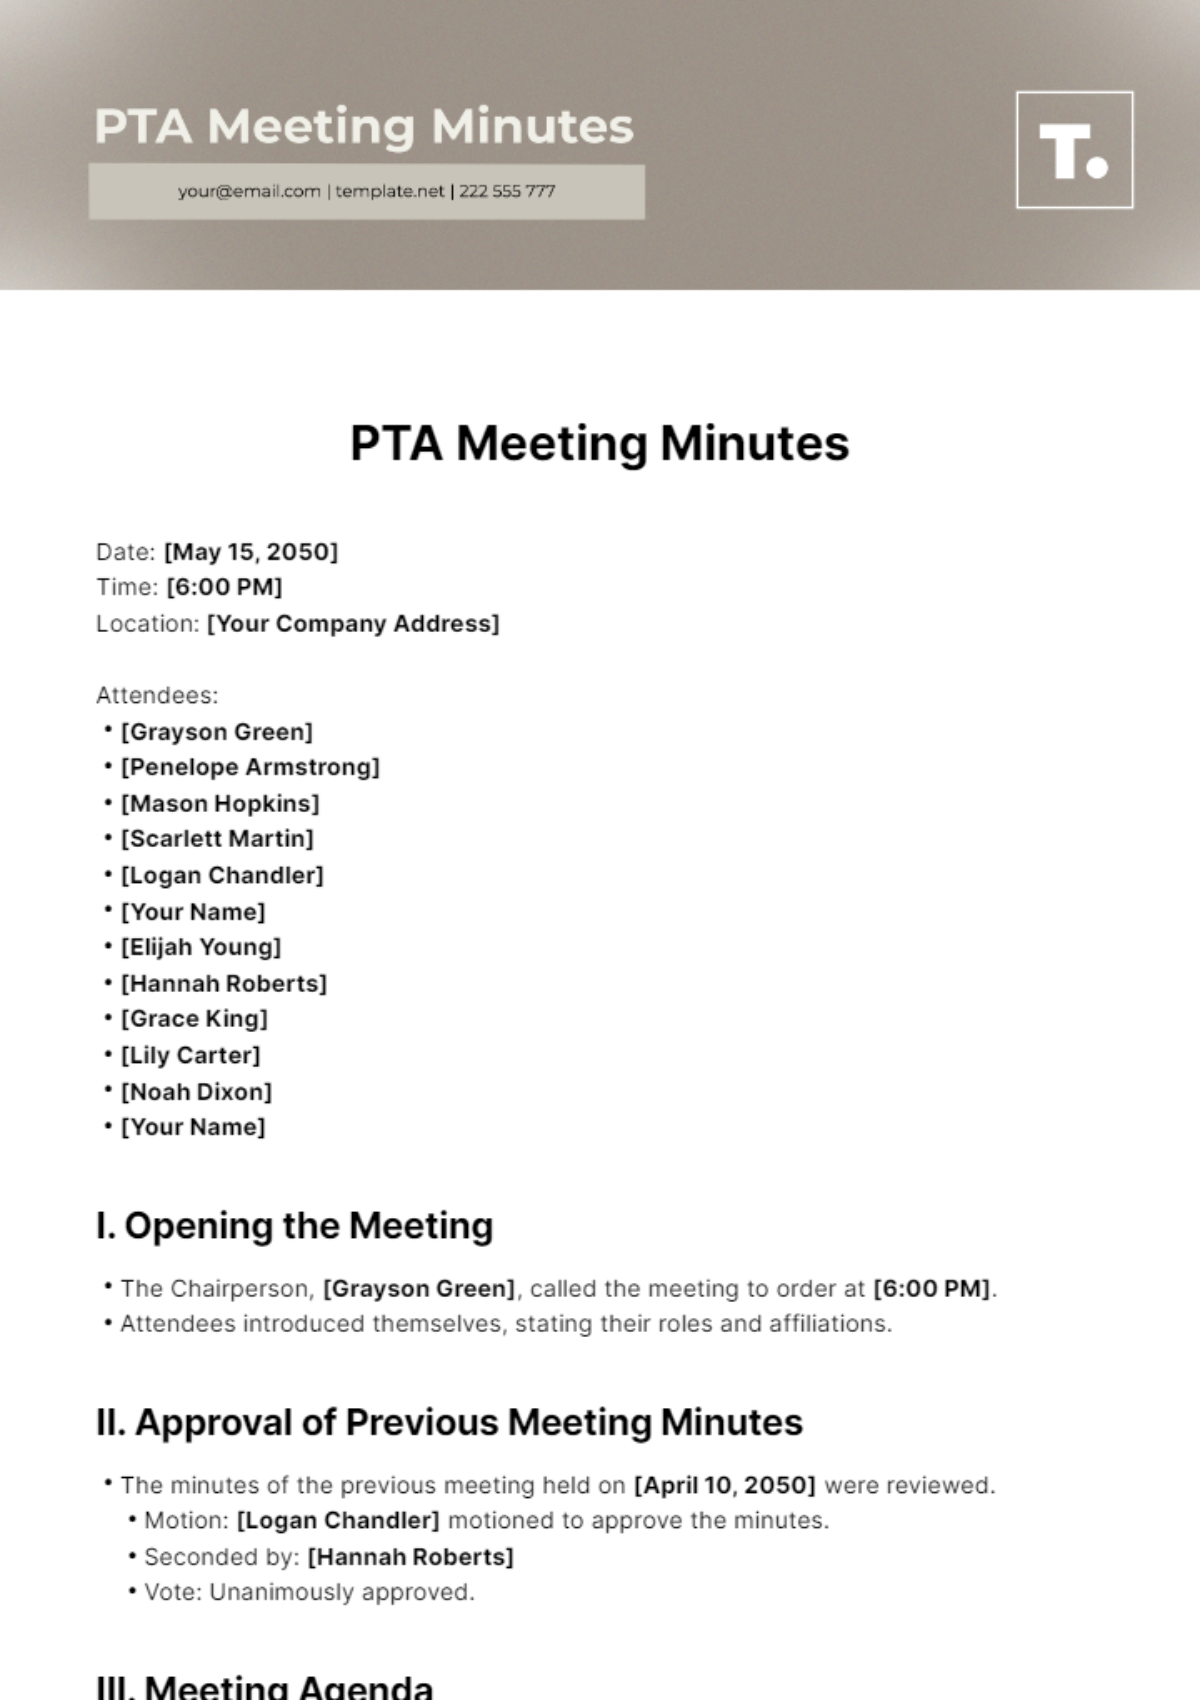 PTA Meeting Minutes Template